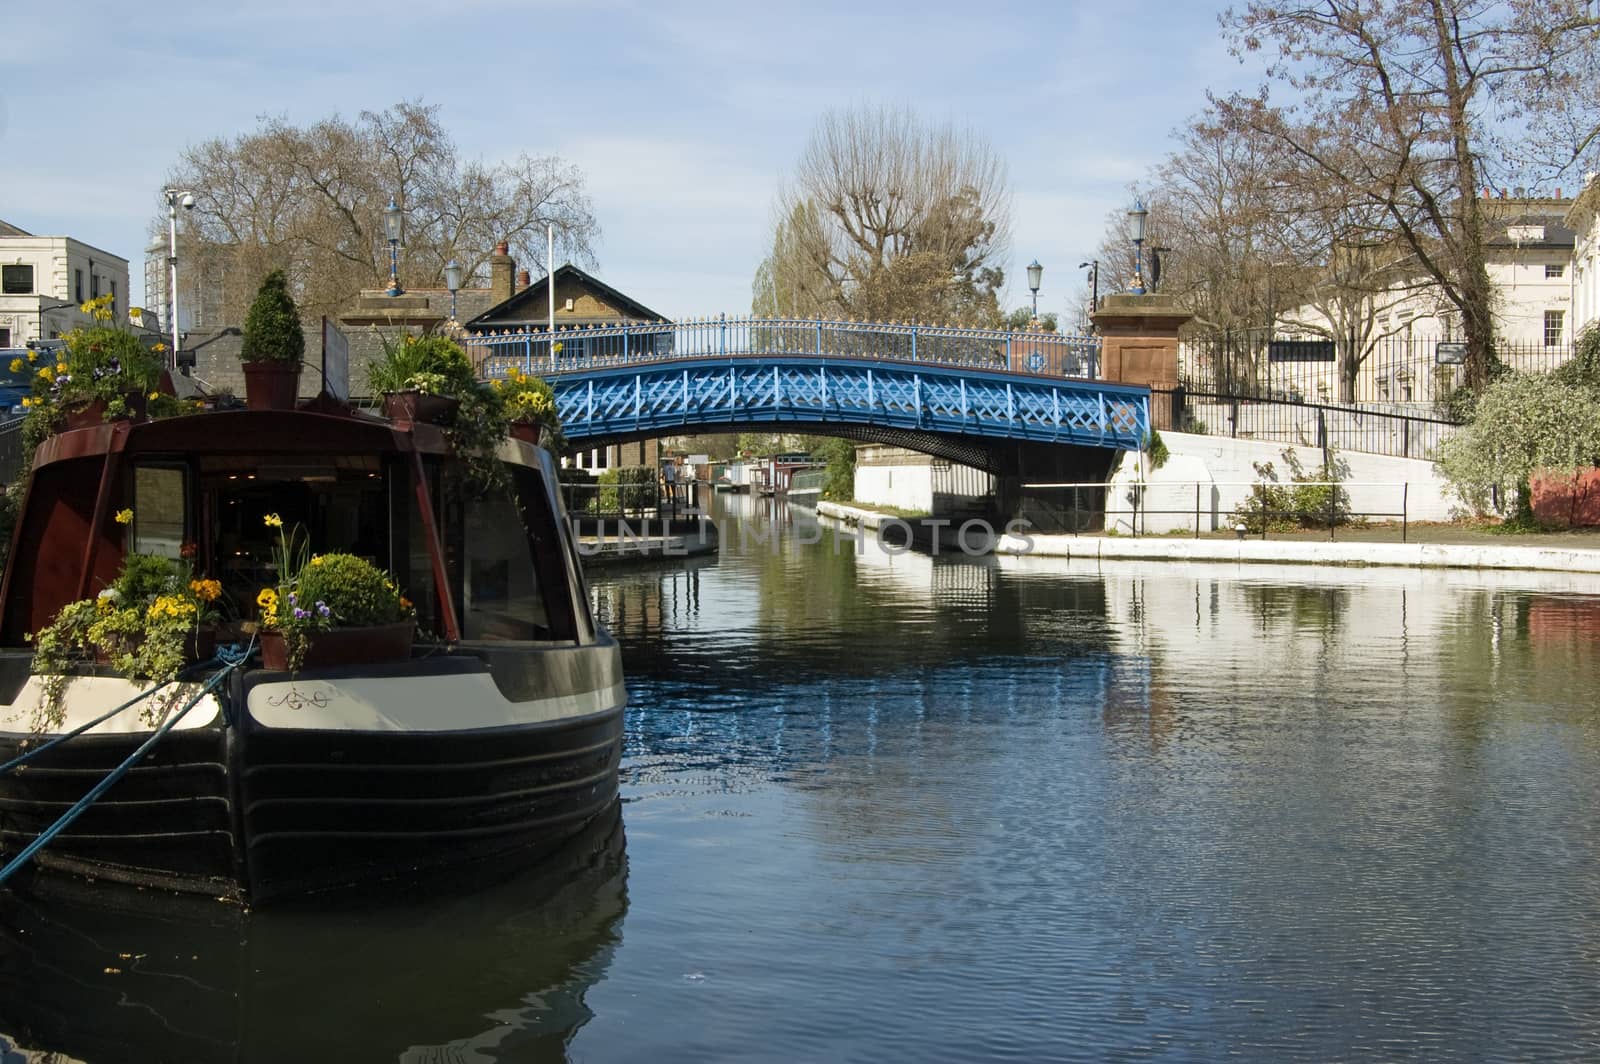 Bridge over Little Venice, Paddington, London by BasPhoto